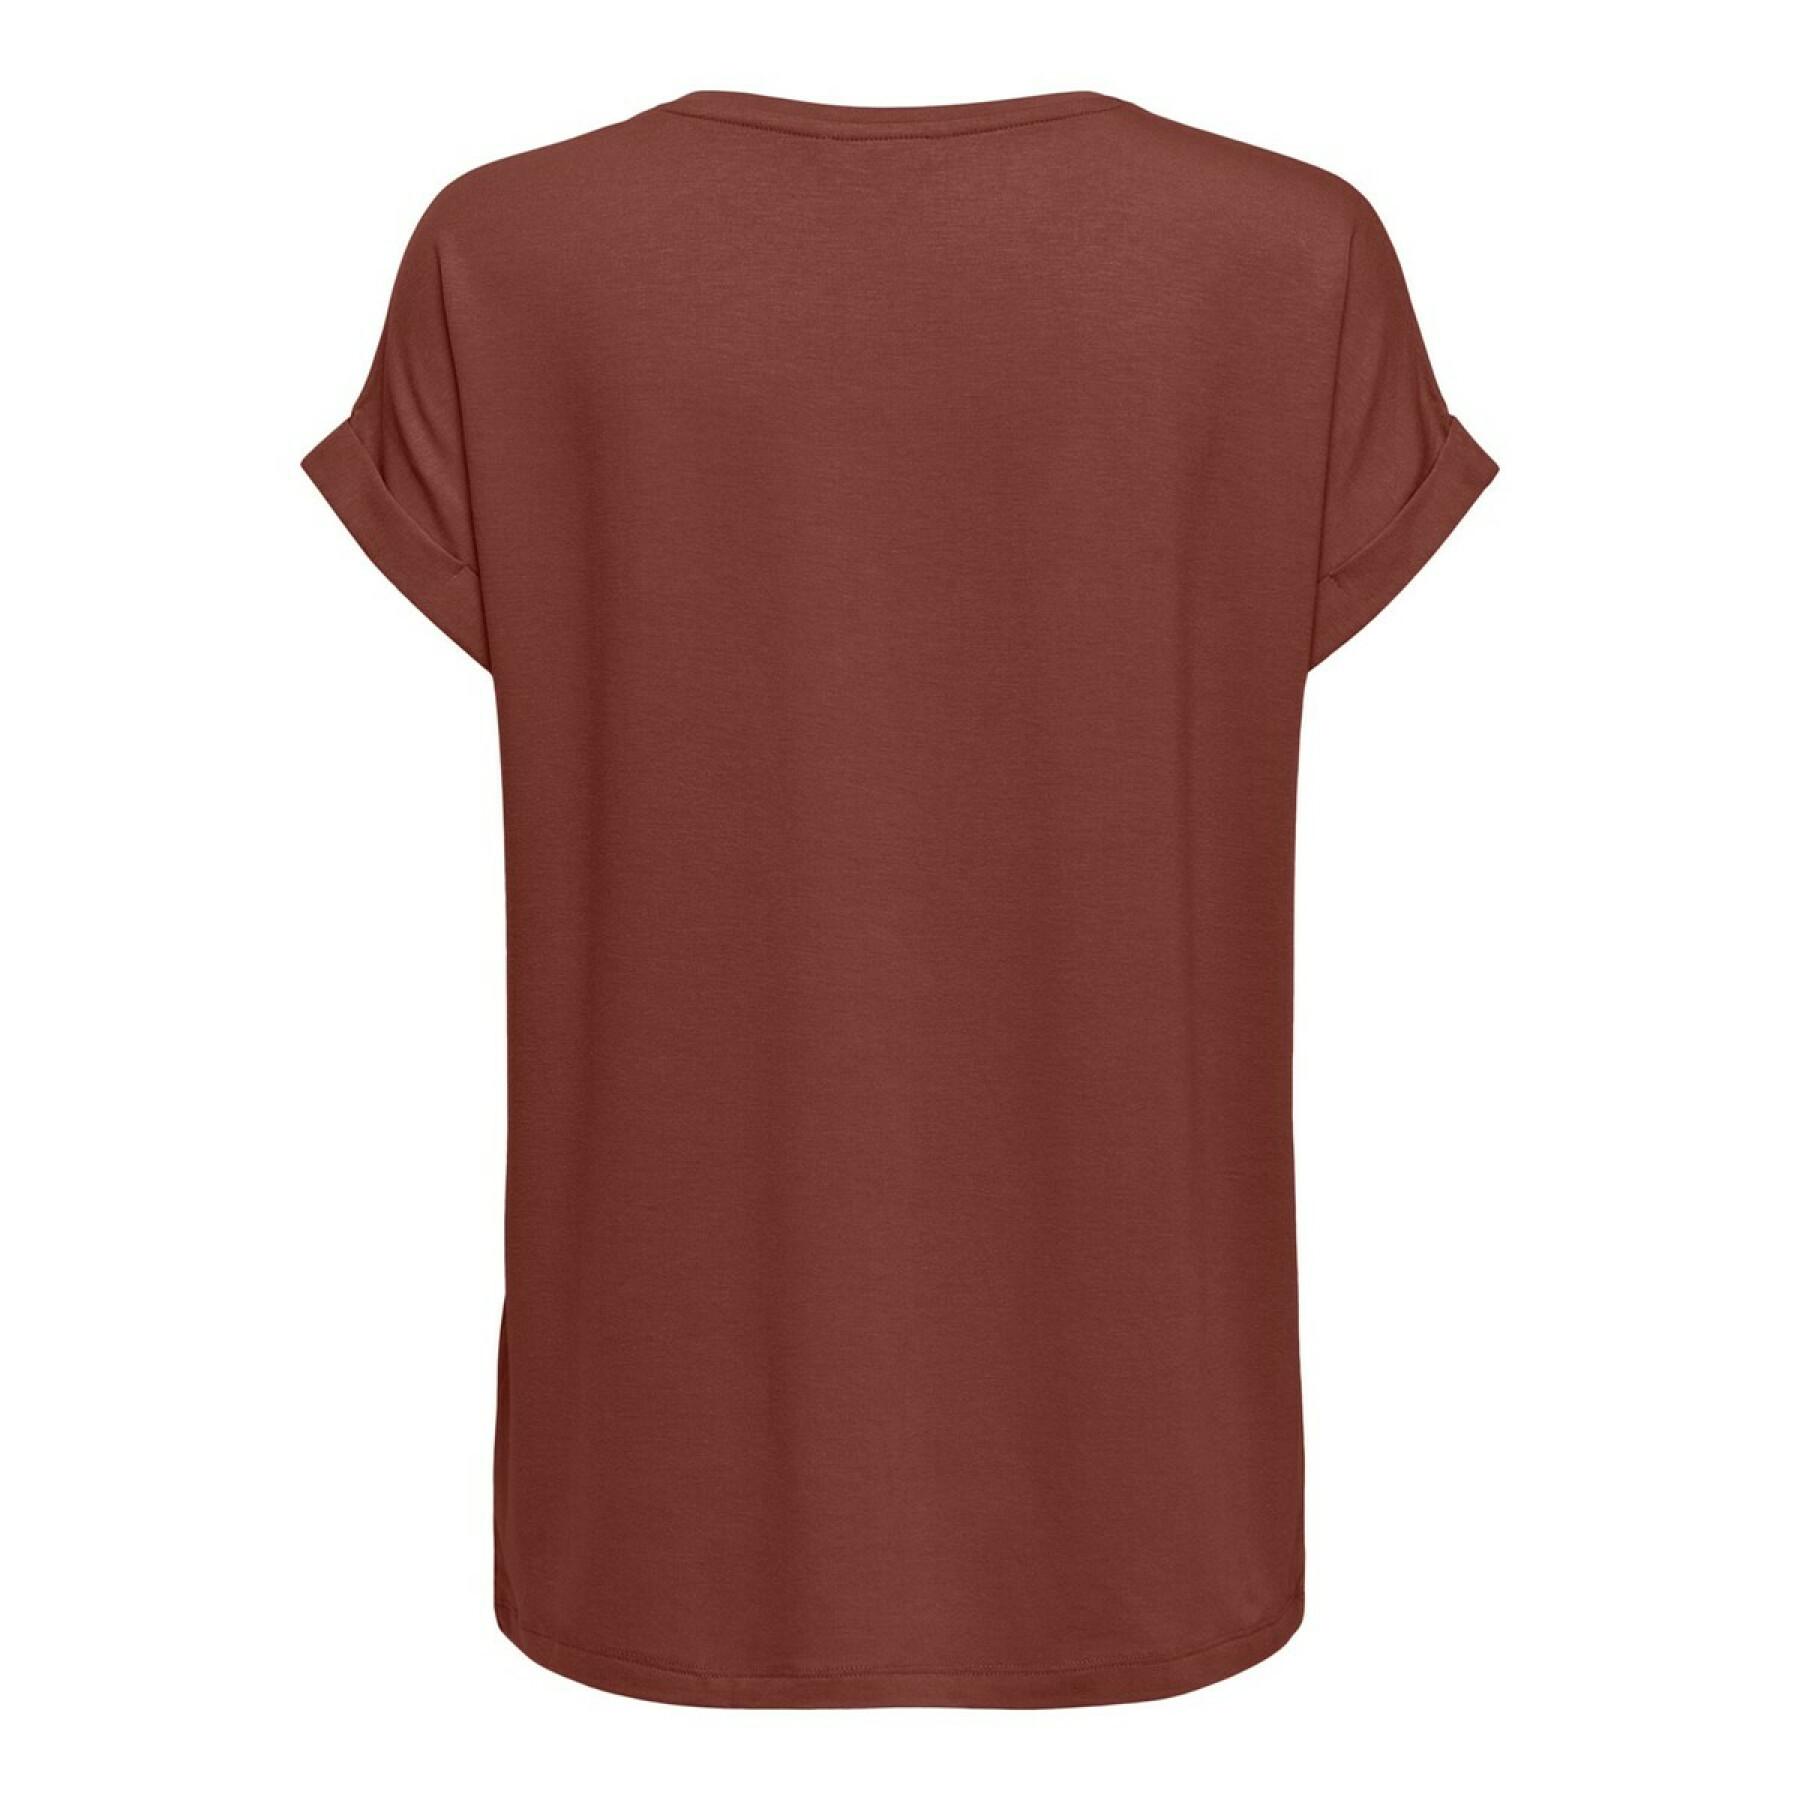 T-shirt mulher Only Moster manga curta pescoço redondo